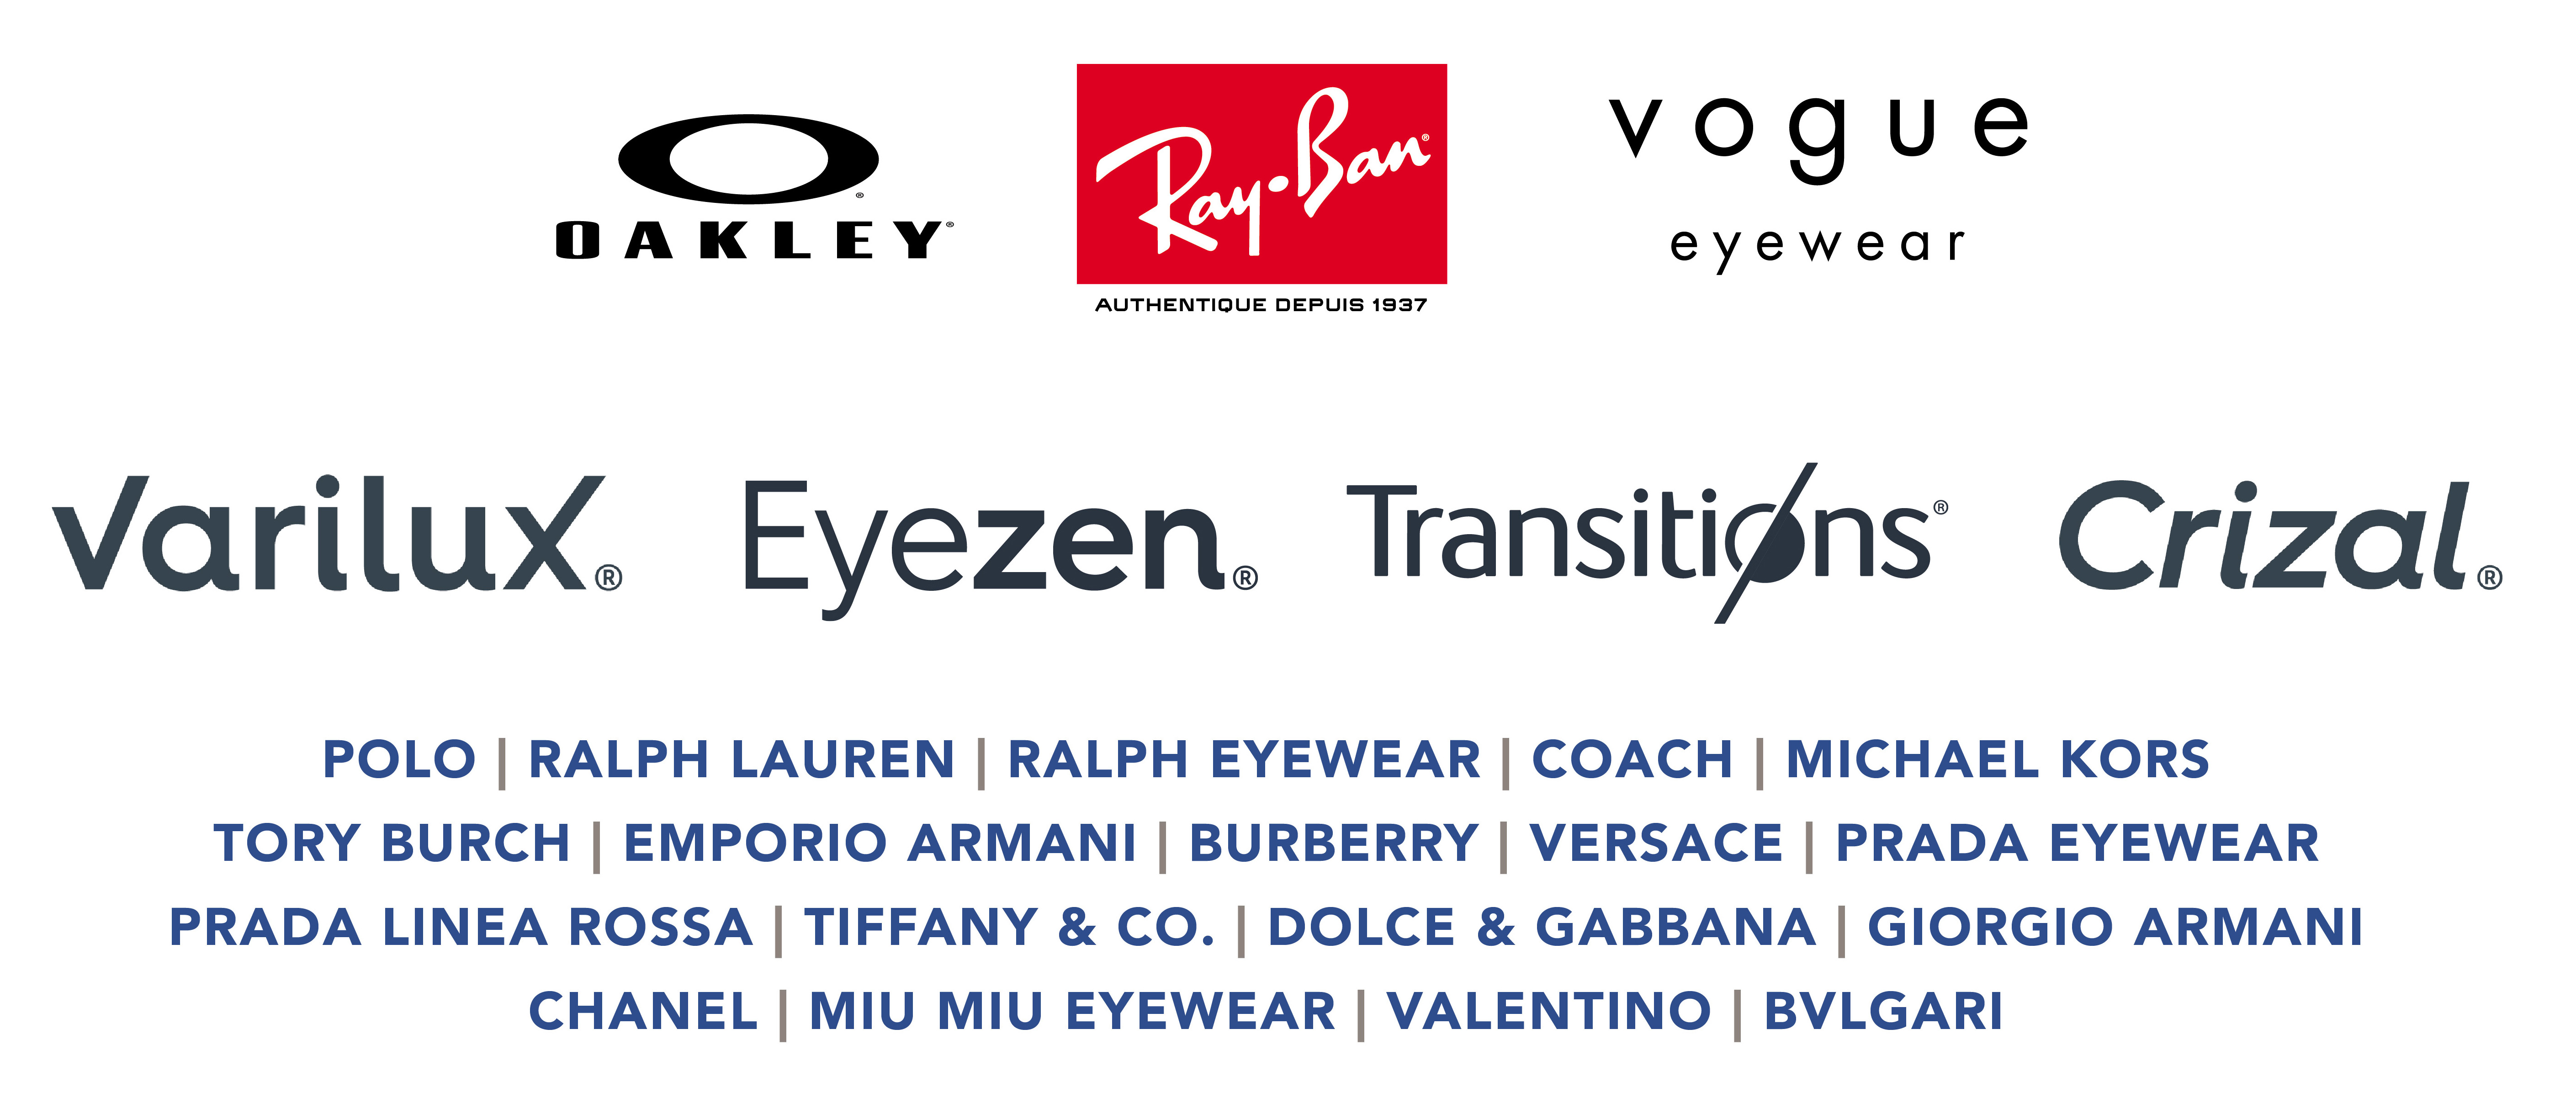 Oakley. Ray-Ban Vogue. Eyewear. Varilux. Eyezen. Transitions. Crizal.  